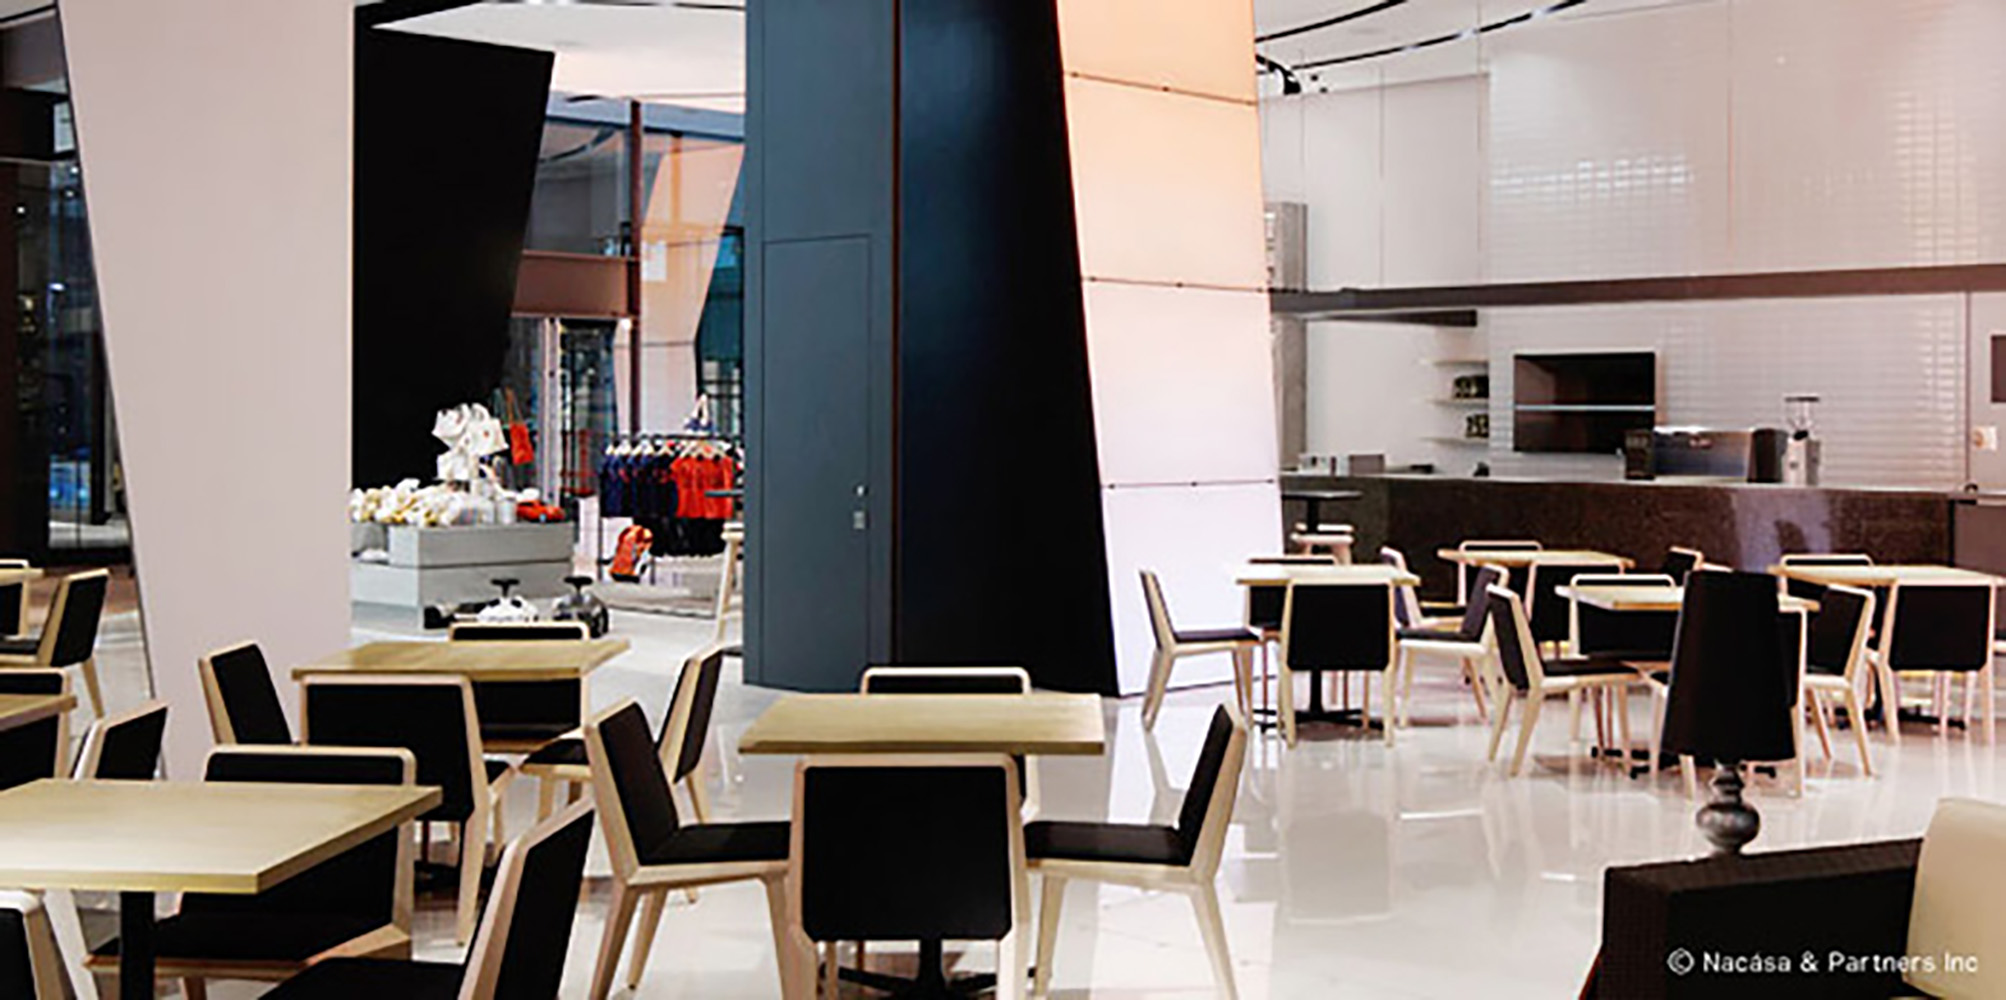 Mercedes Me Osaka Downstairs Coffee Transit General Office Inc ファッション 音楽 デザイン アート 食をコンテンツに遊び場を創造する空間創造総合企業